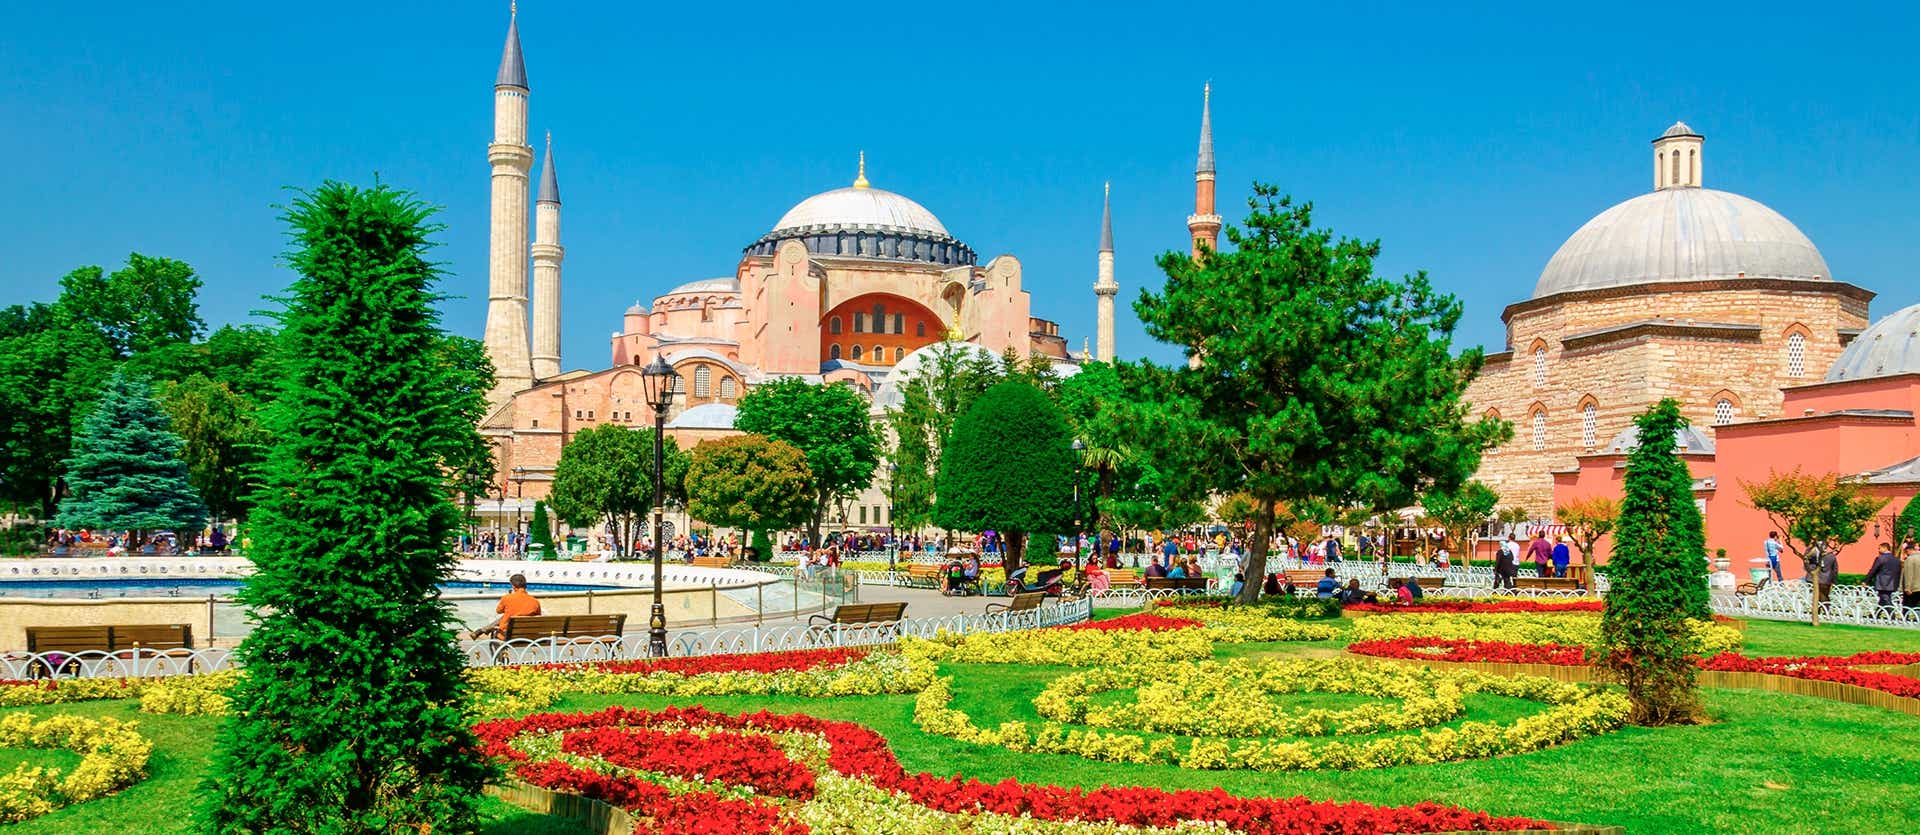 Hagia Sophia <span class="iconos separador"></span> Estambul